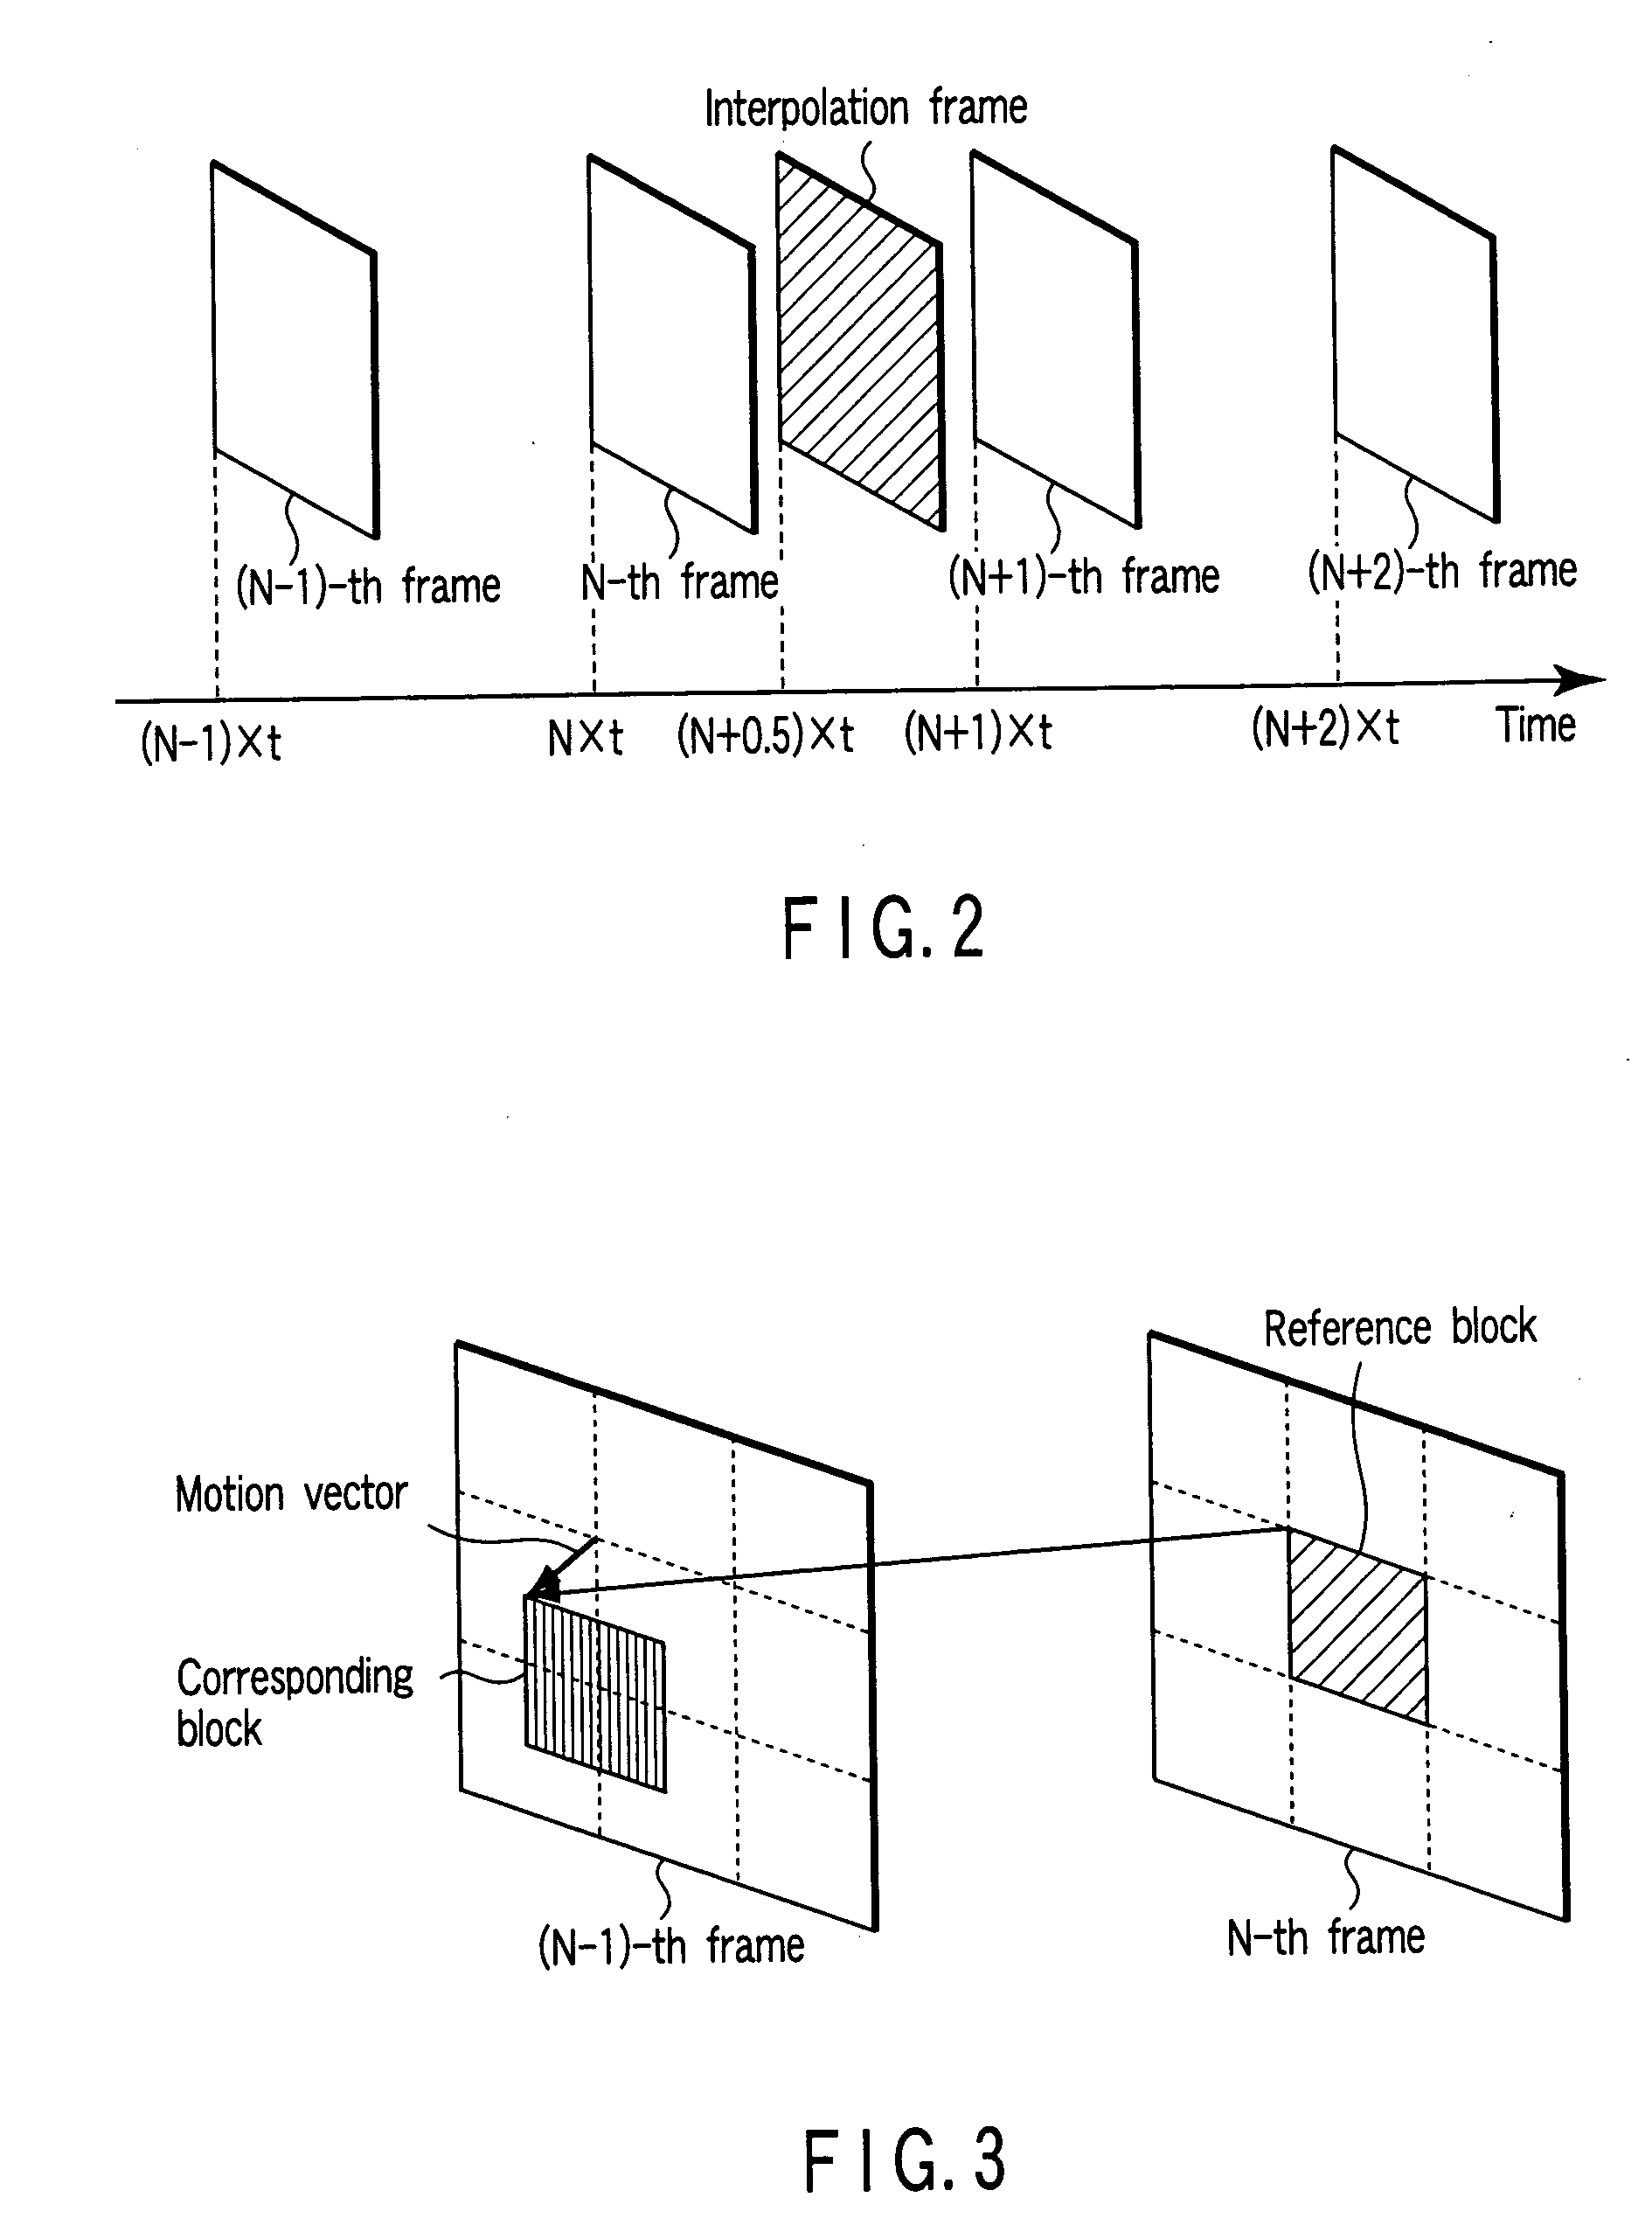 Interpolation image generating method and apparatus